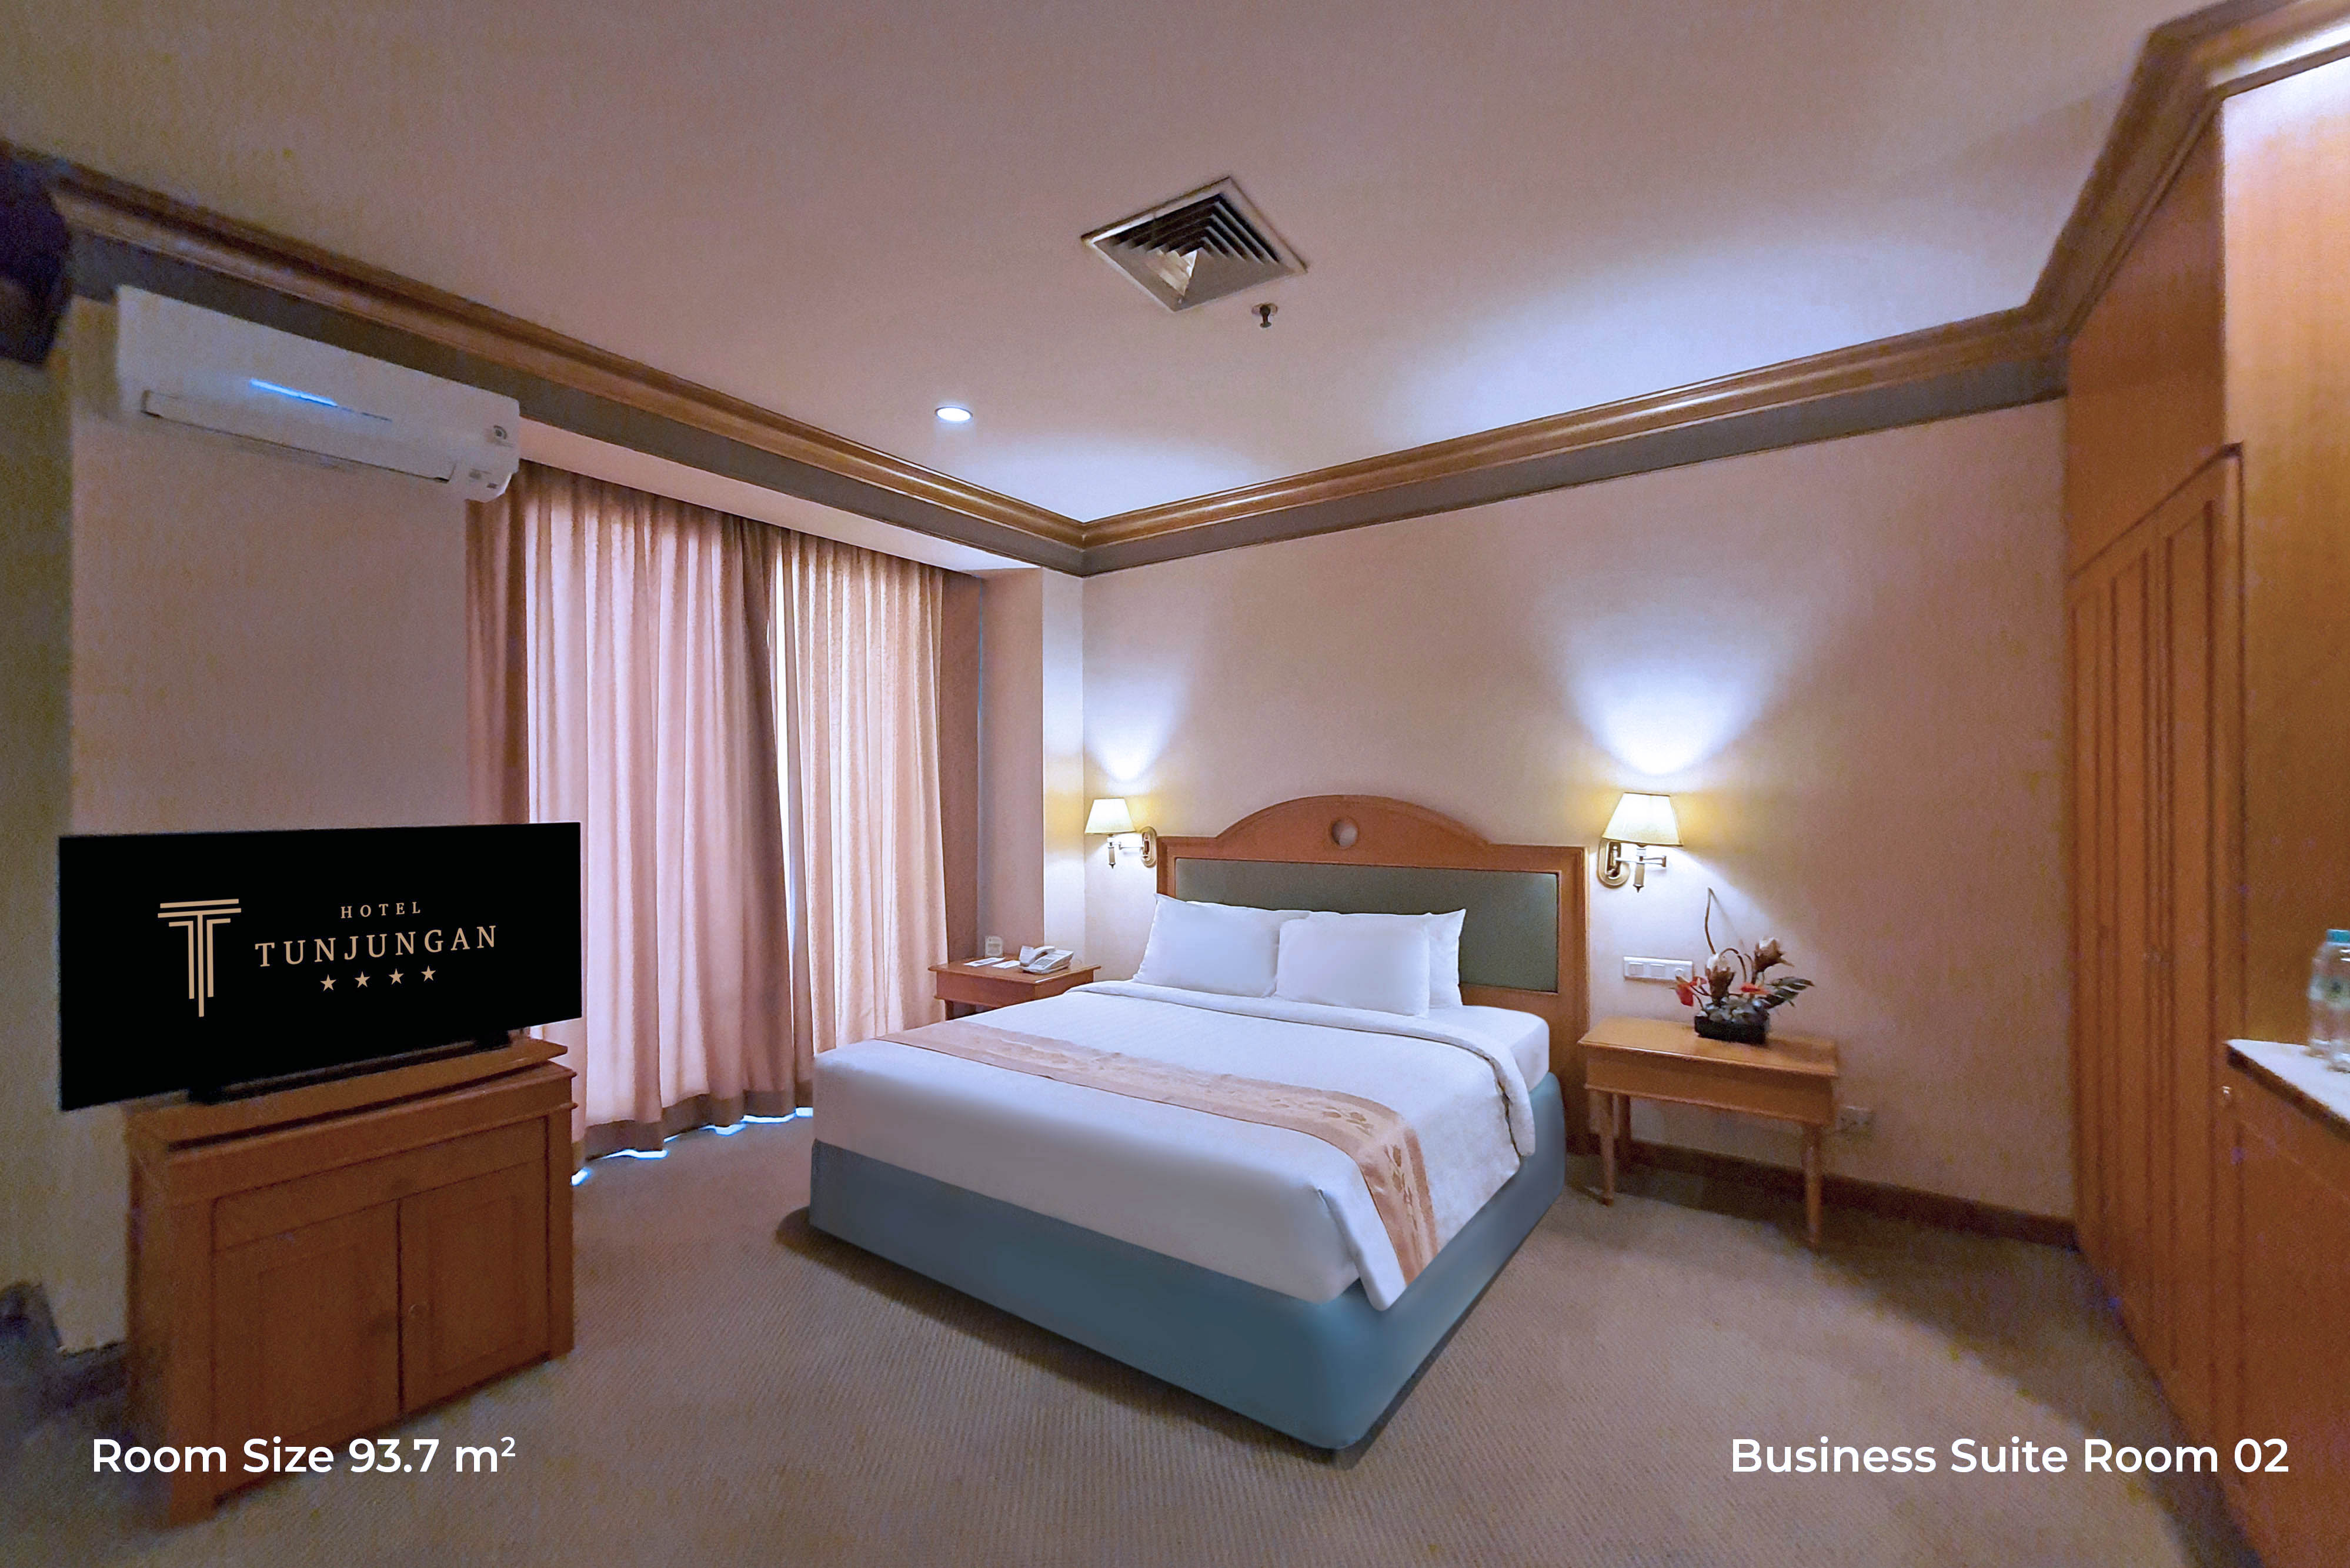 Business Suite Room by tunjunganhotel.com